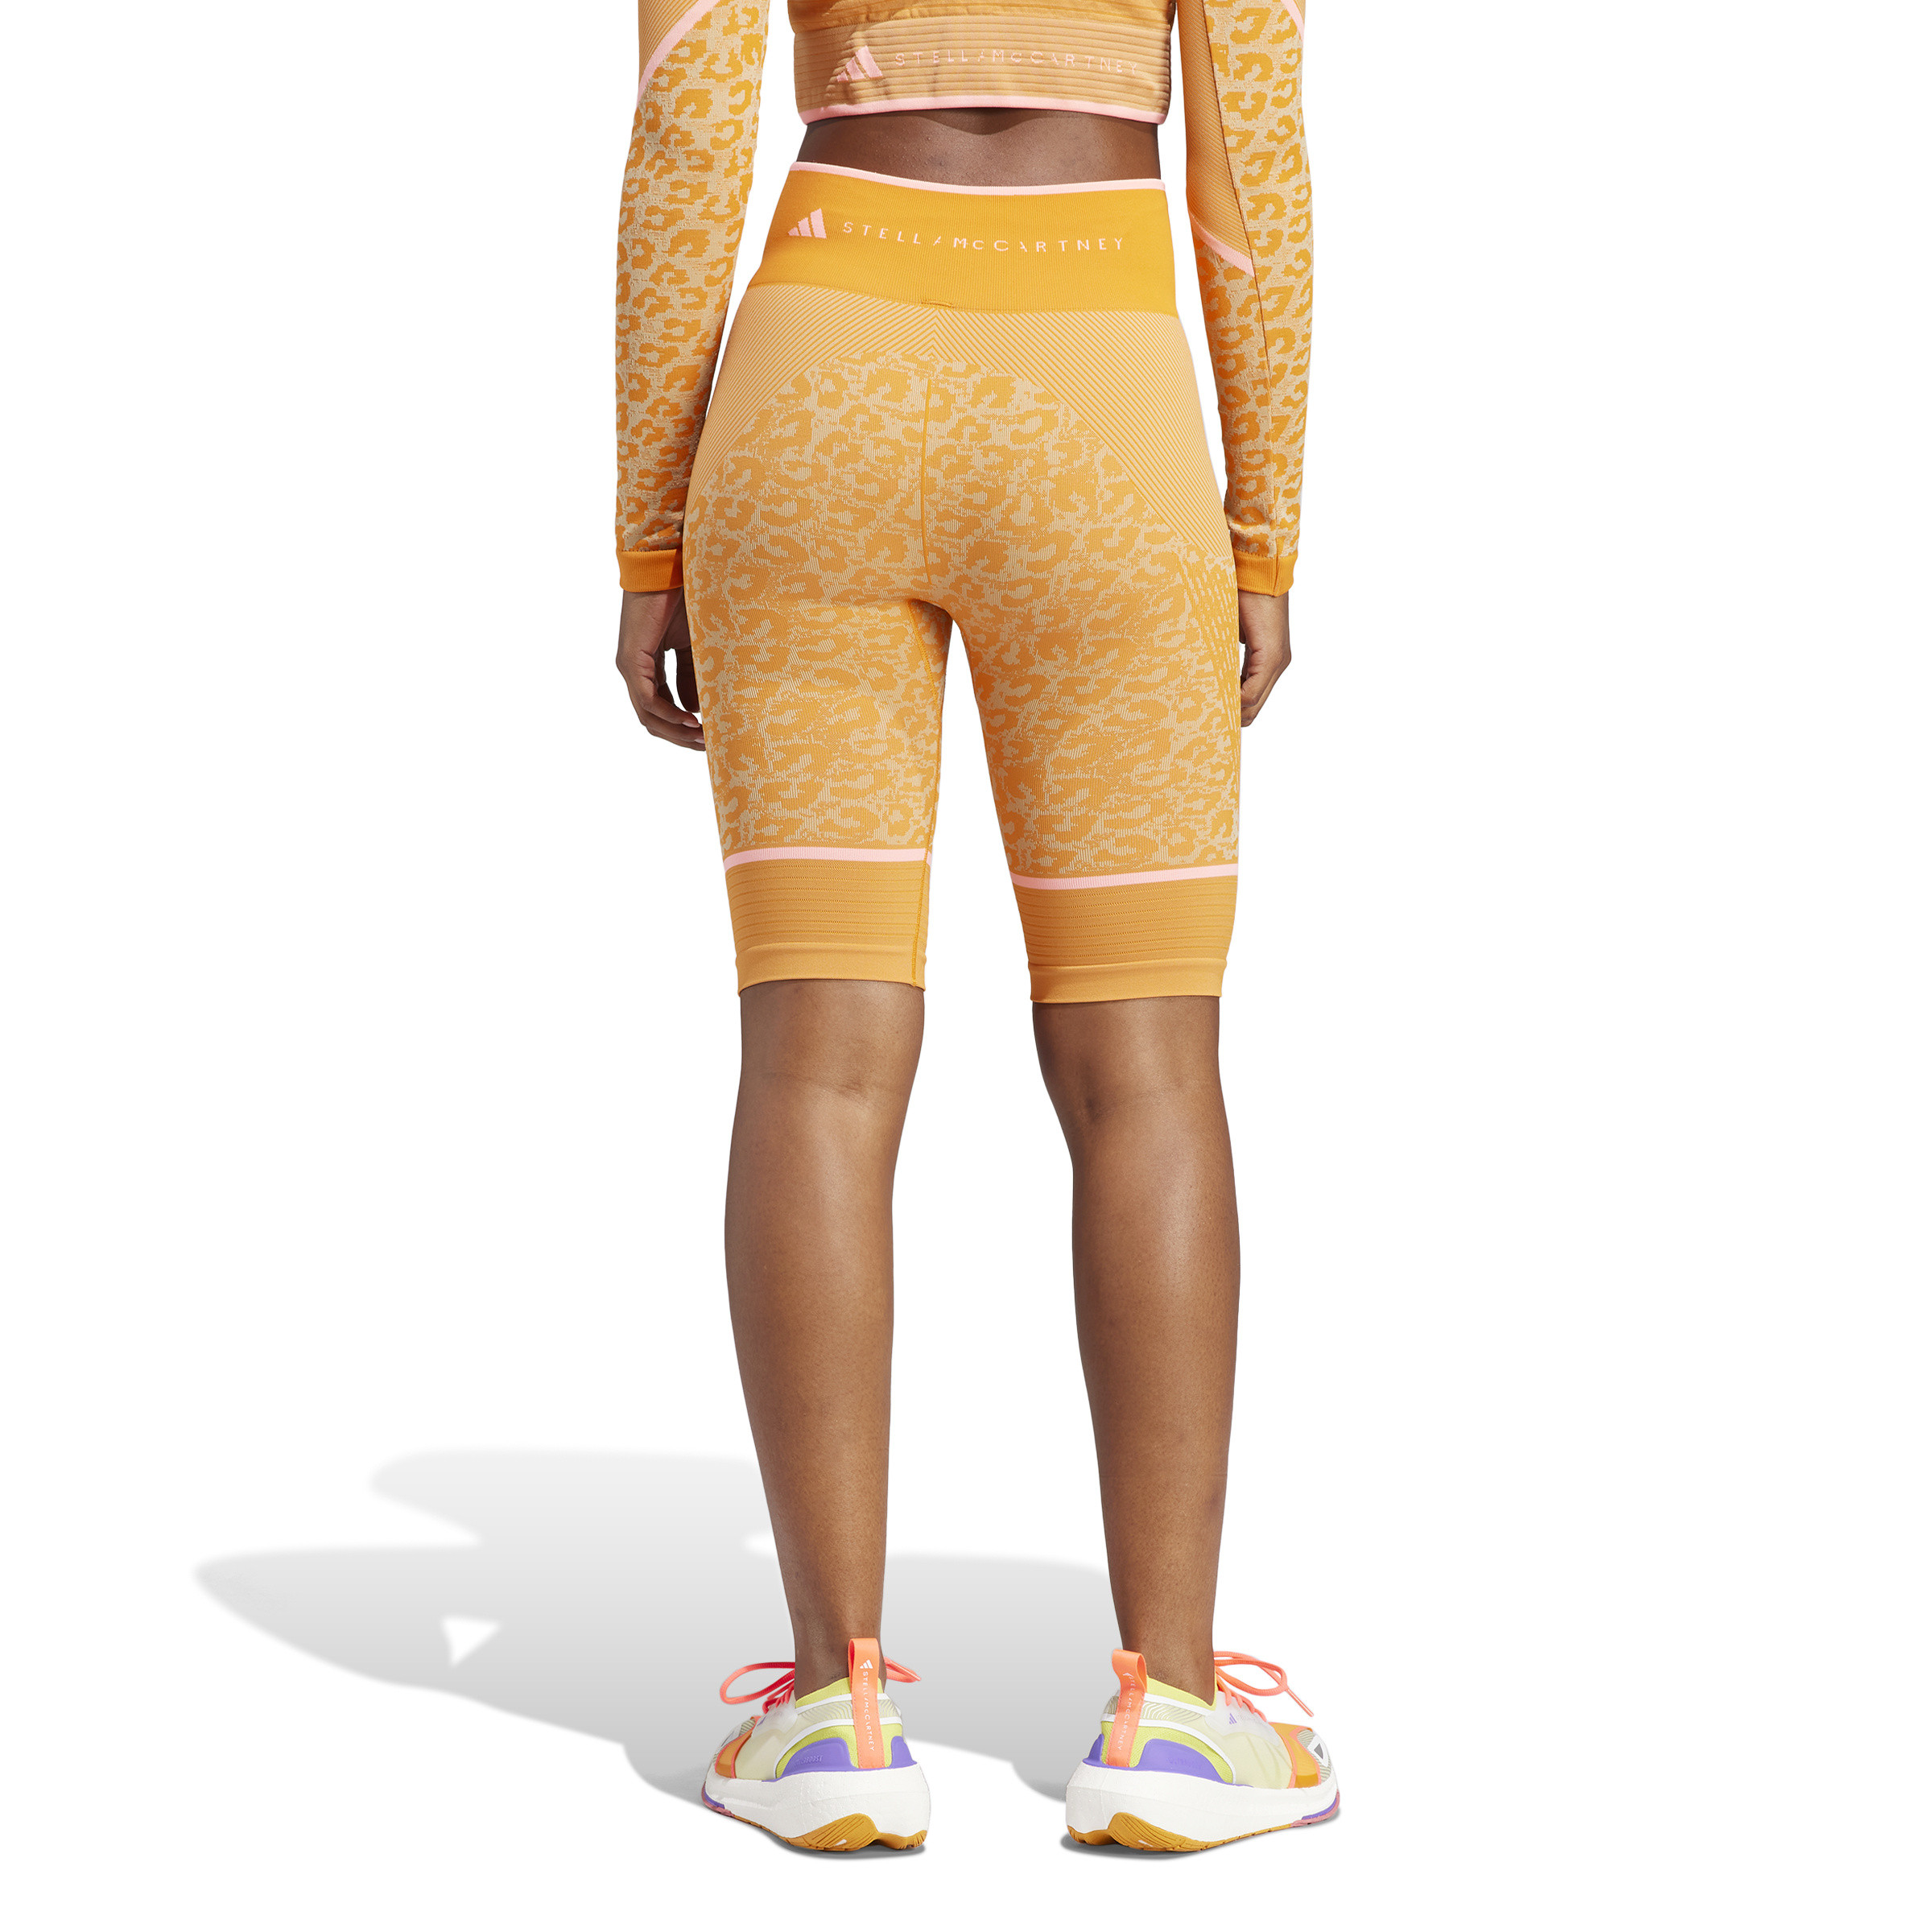 Adidas by Stella McCartney - TrueStrength Seamless Bike Yoga Leggings, Orange, large image number 2